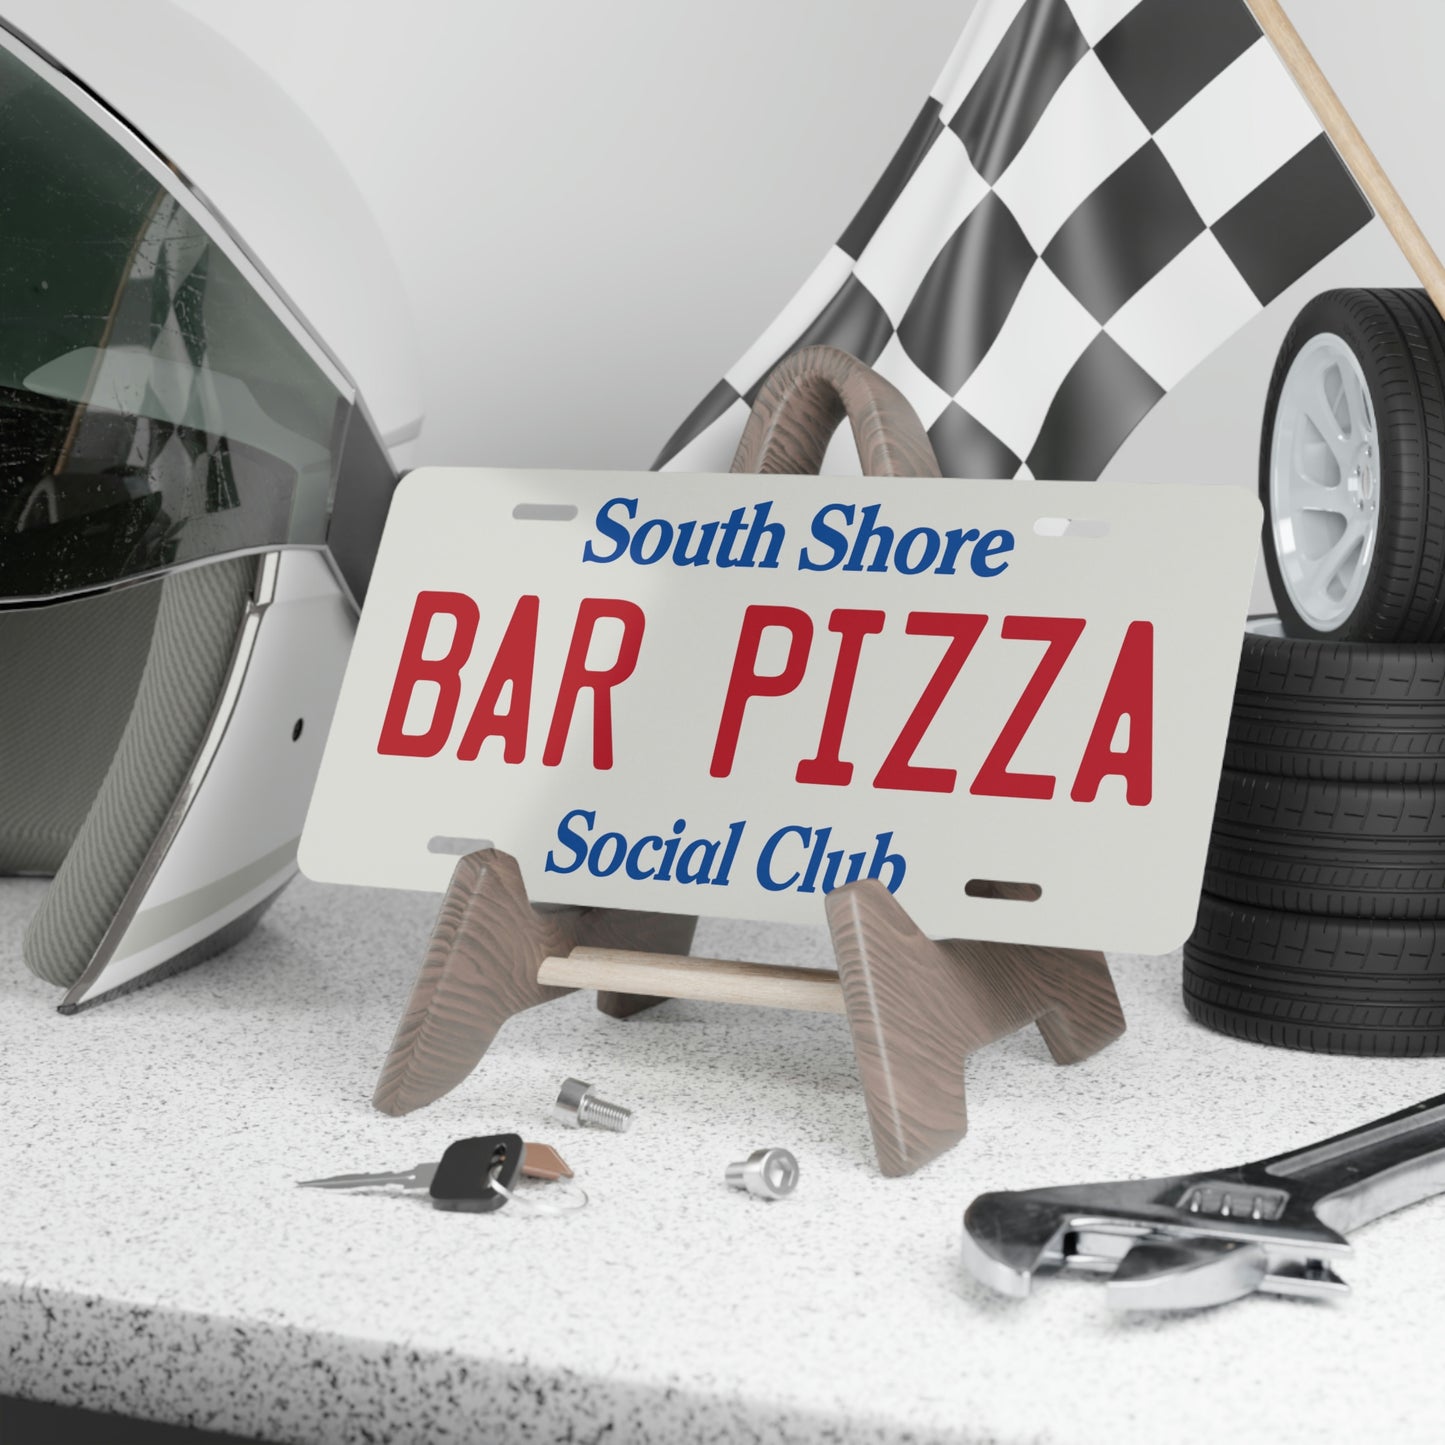 South Shore Bar Pizza Social Club MA Vanity Plate